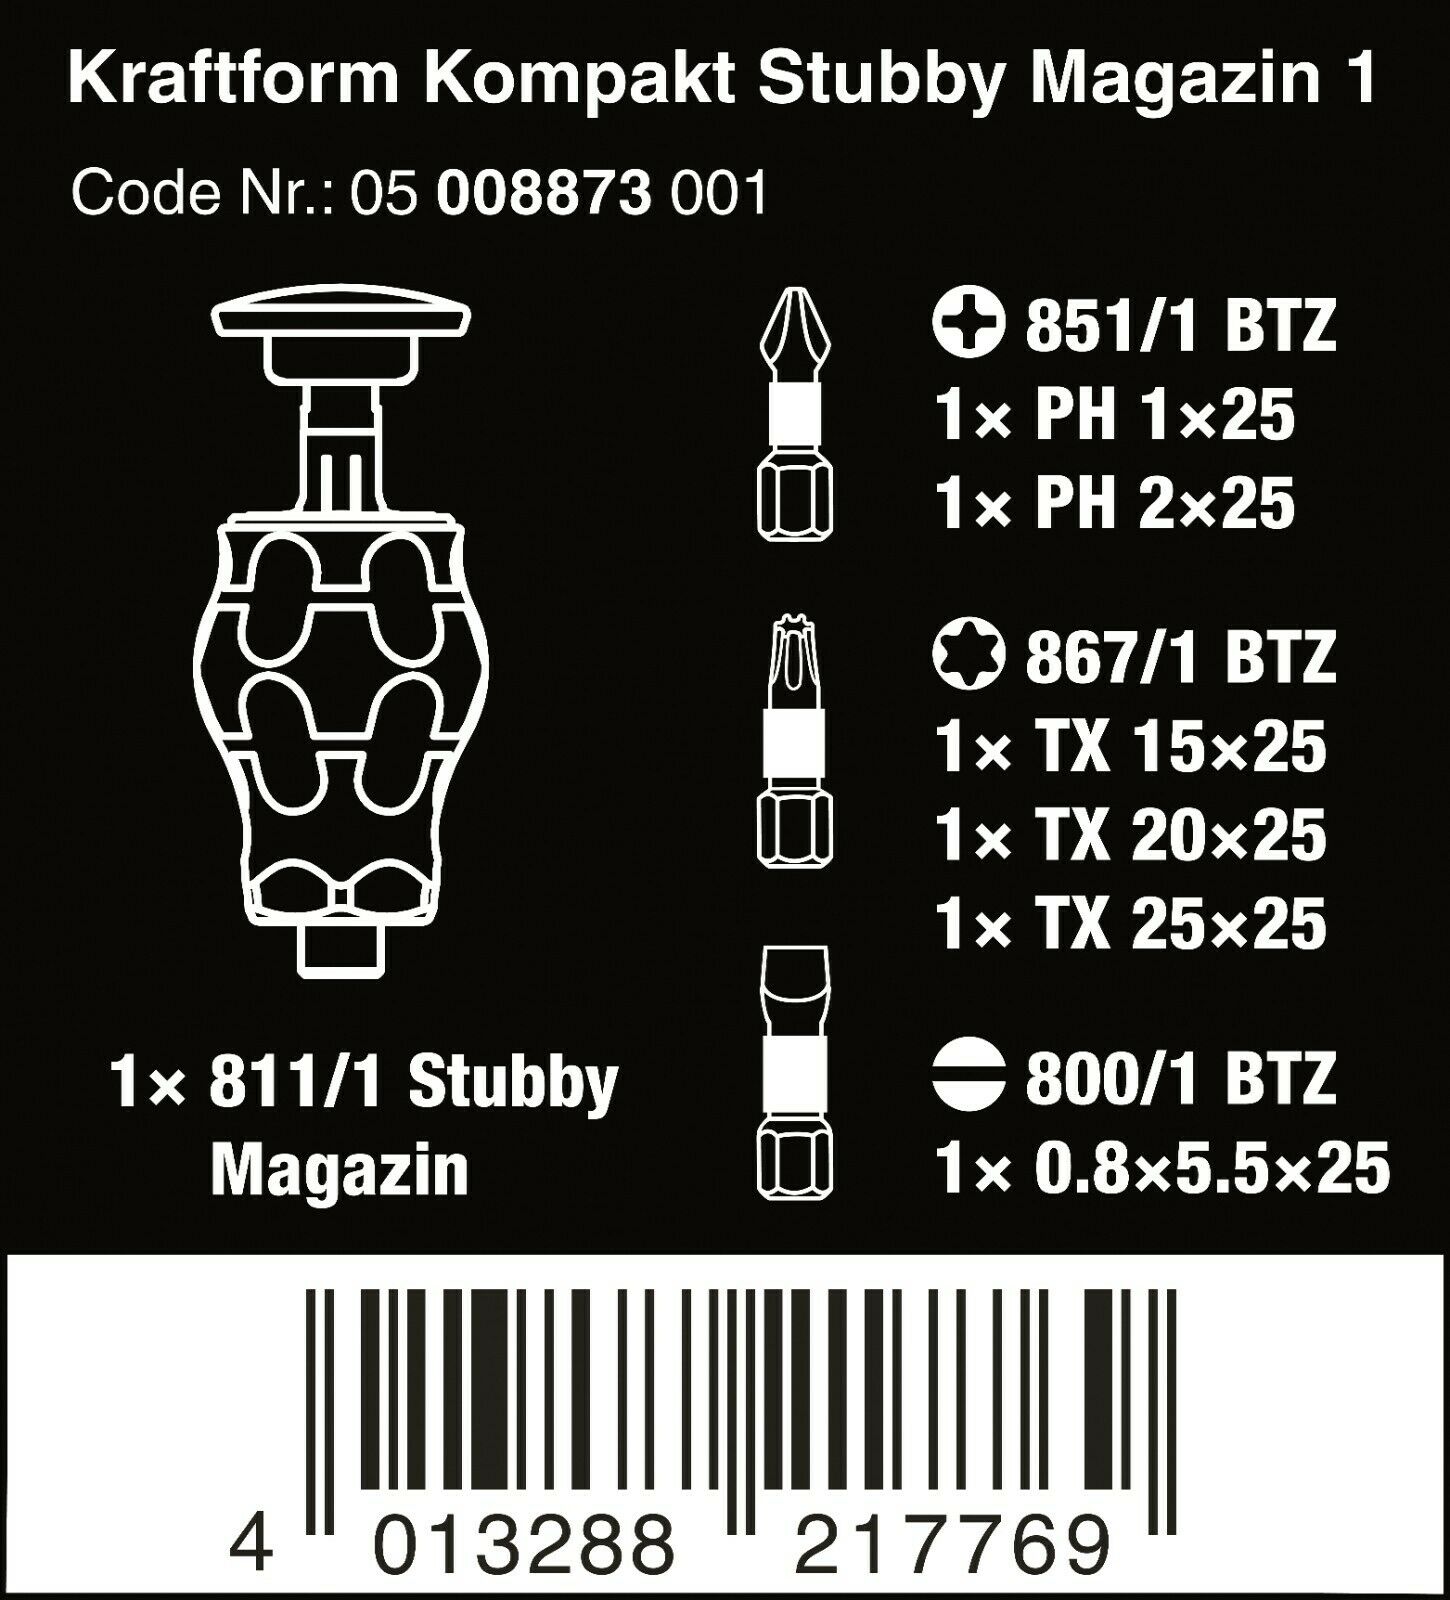 wera kraftform kompakt stubby magazine 1 screwdriver set 05008873001